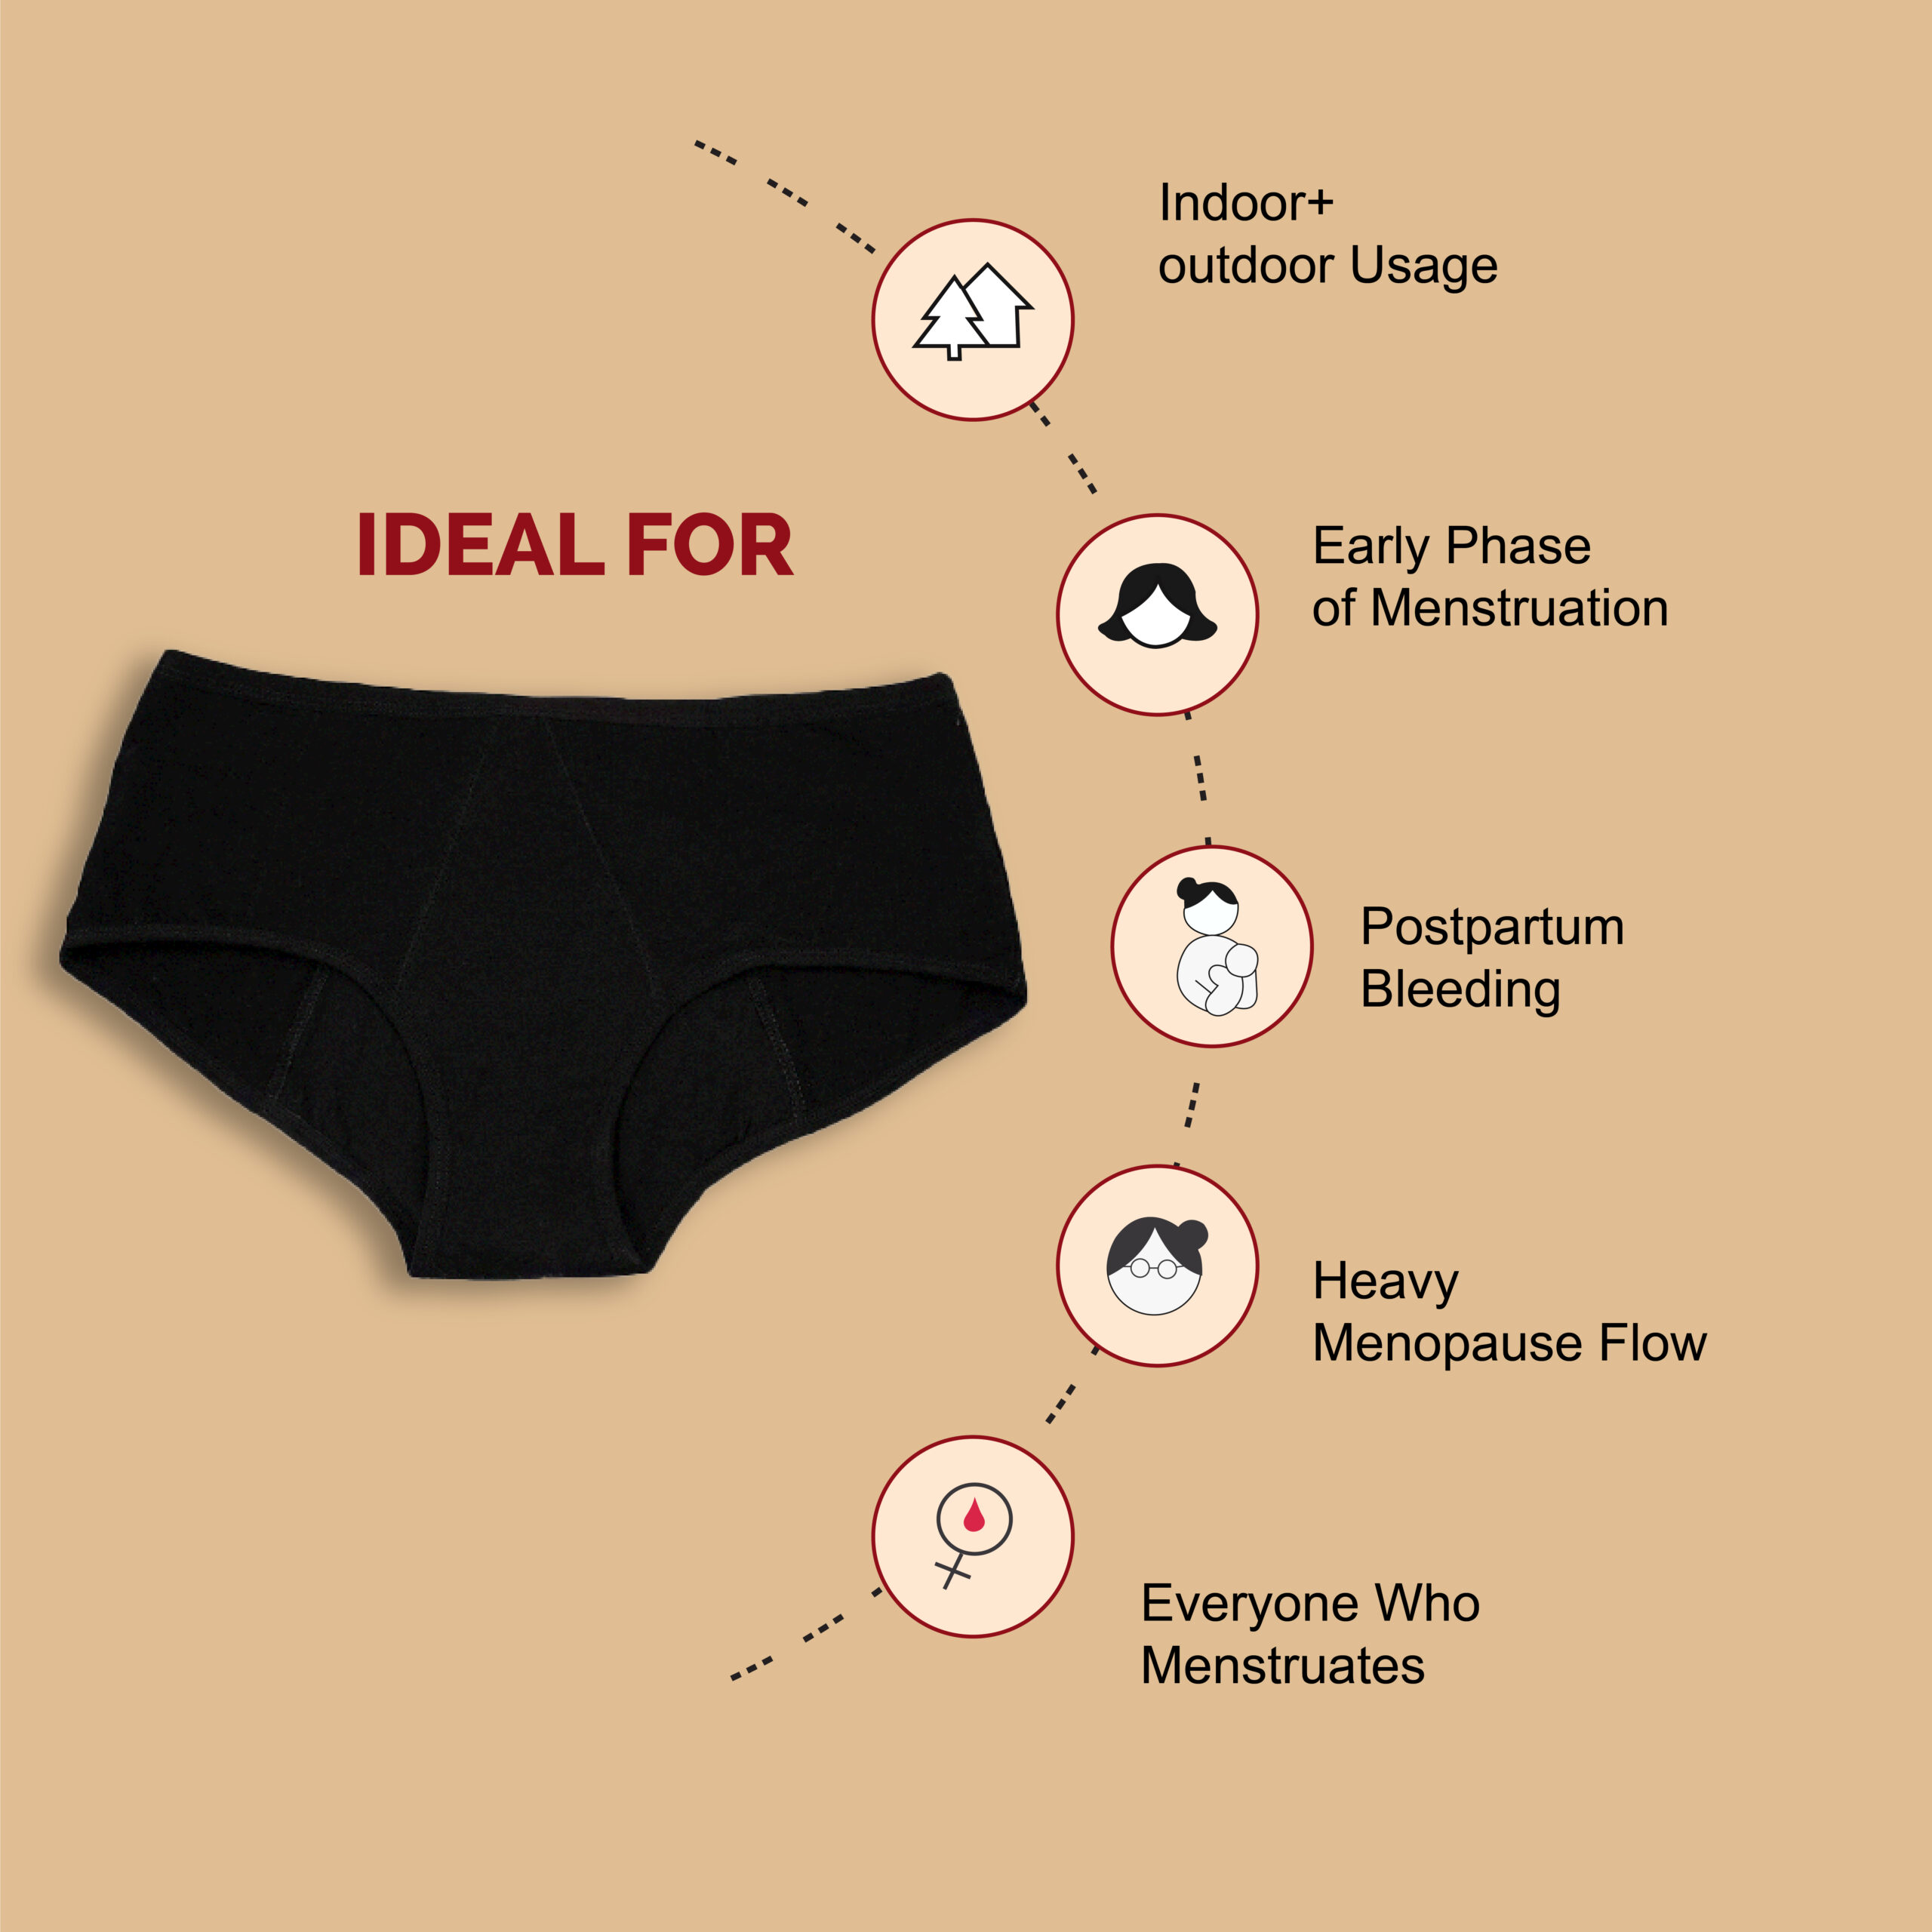 Senzicare Reusable Leak Proof Menstrual Period Panty For Women - Senziwash